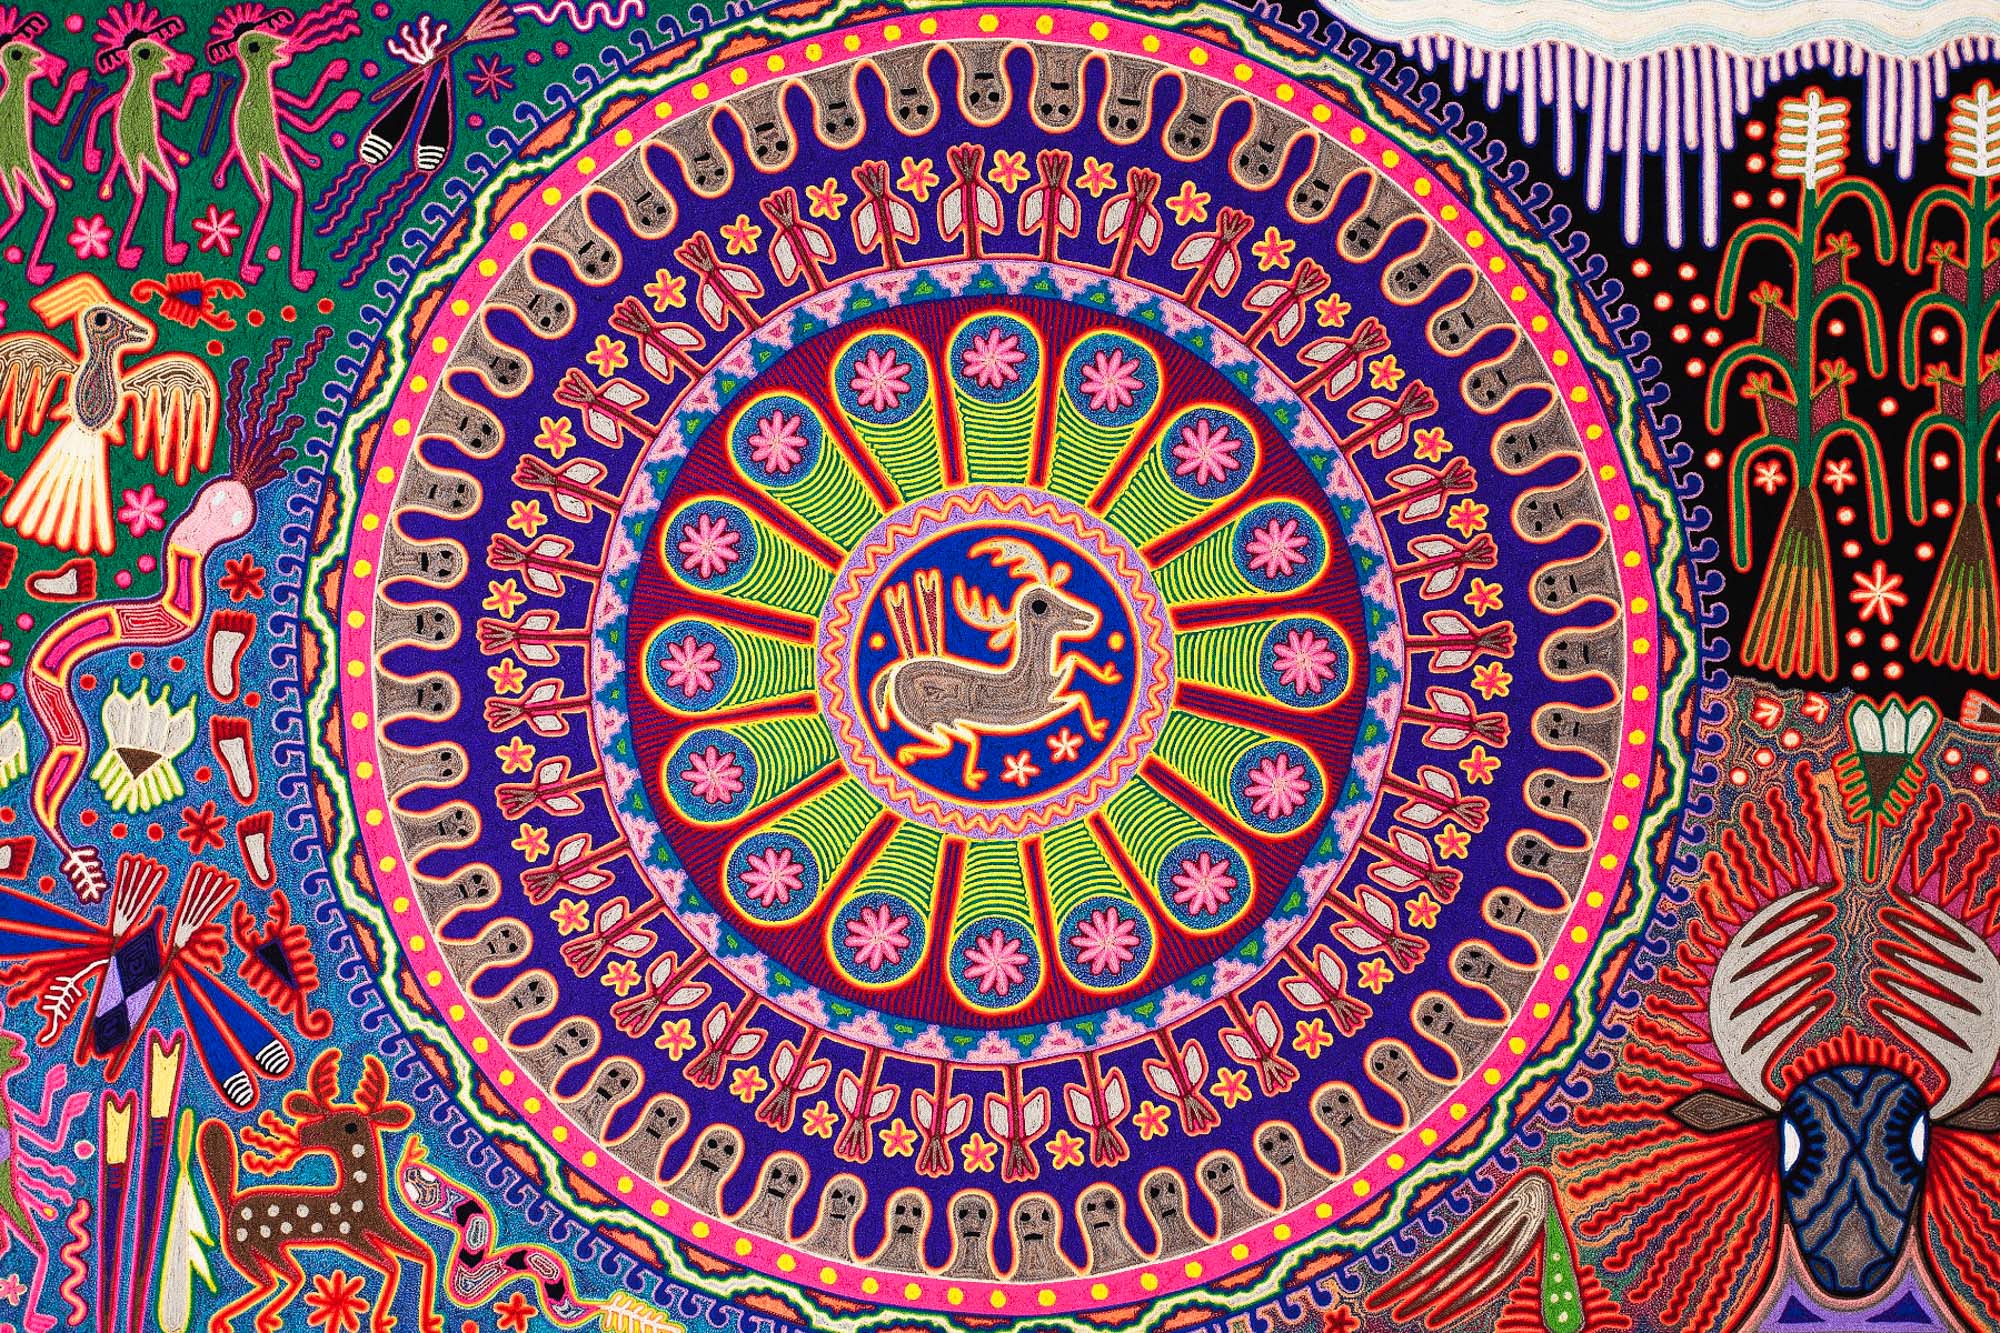 A traditional Huichol yarn painting